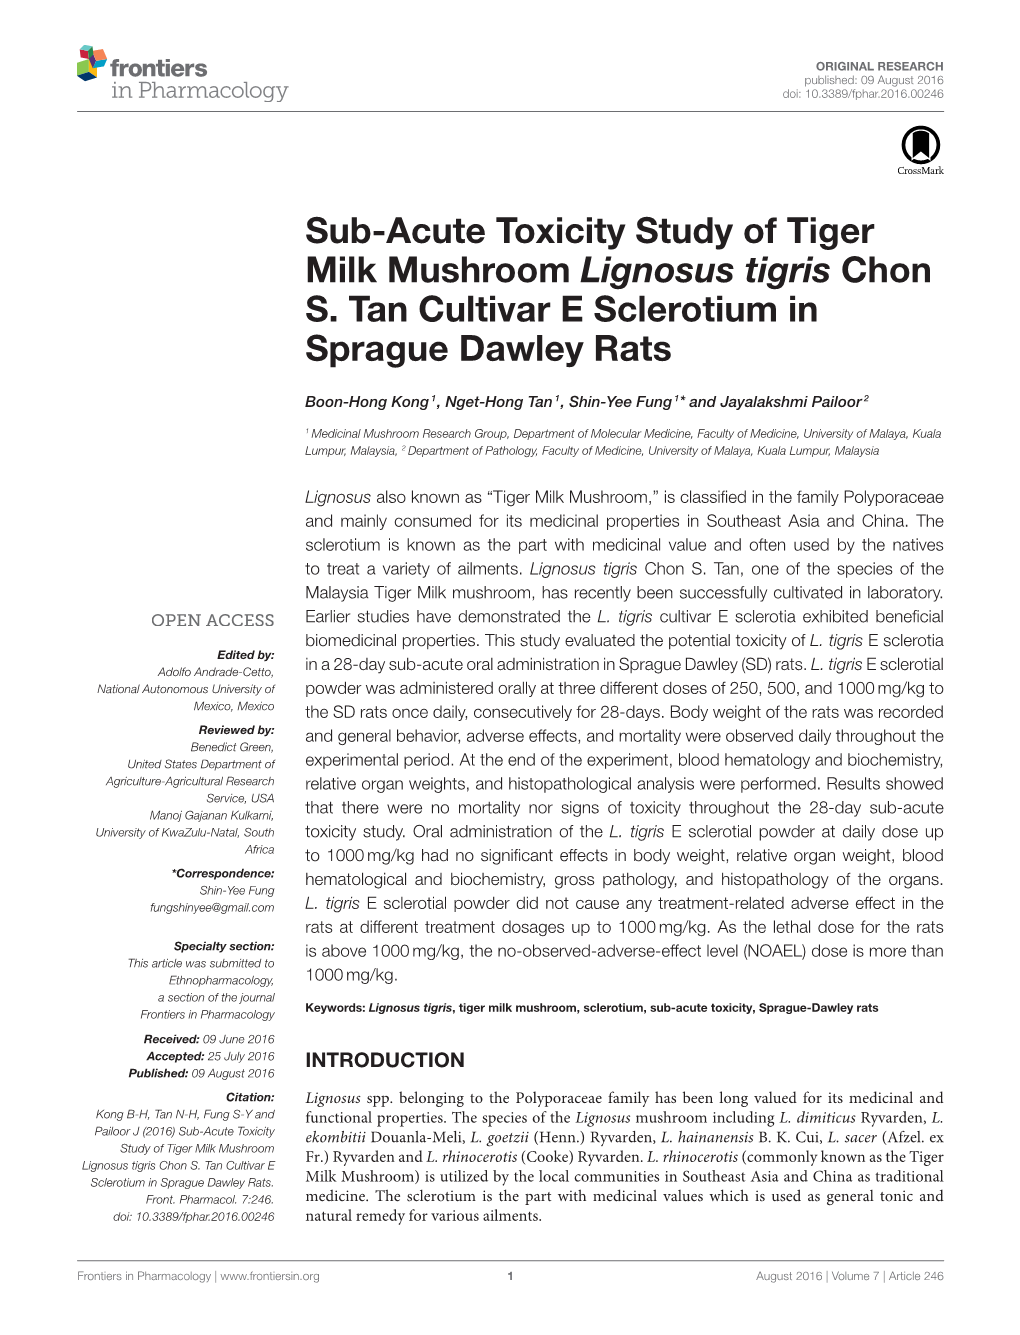 Sub-Acute Toxicity Study of Tiger Milk Mushroom Lignosus Tigris Chon S